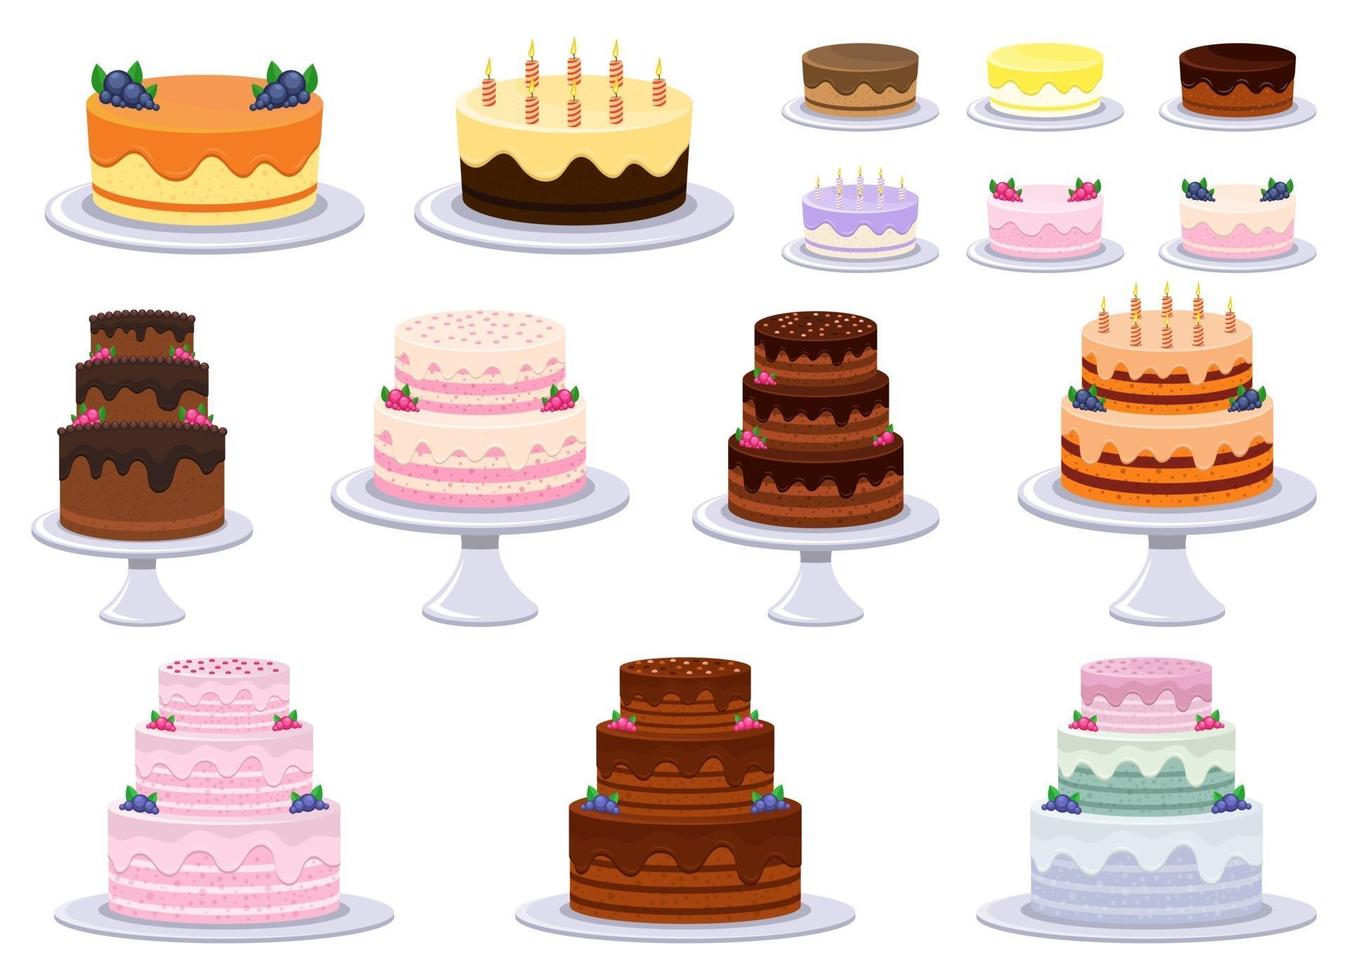 Birthday cake vector design illustration set isolated on white background